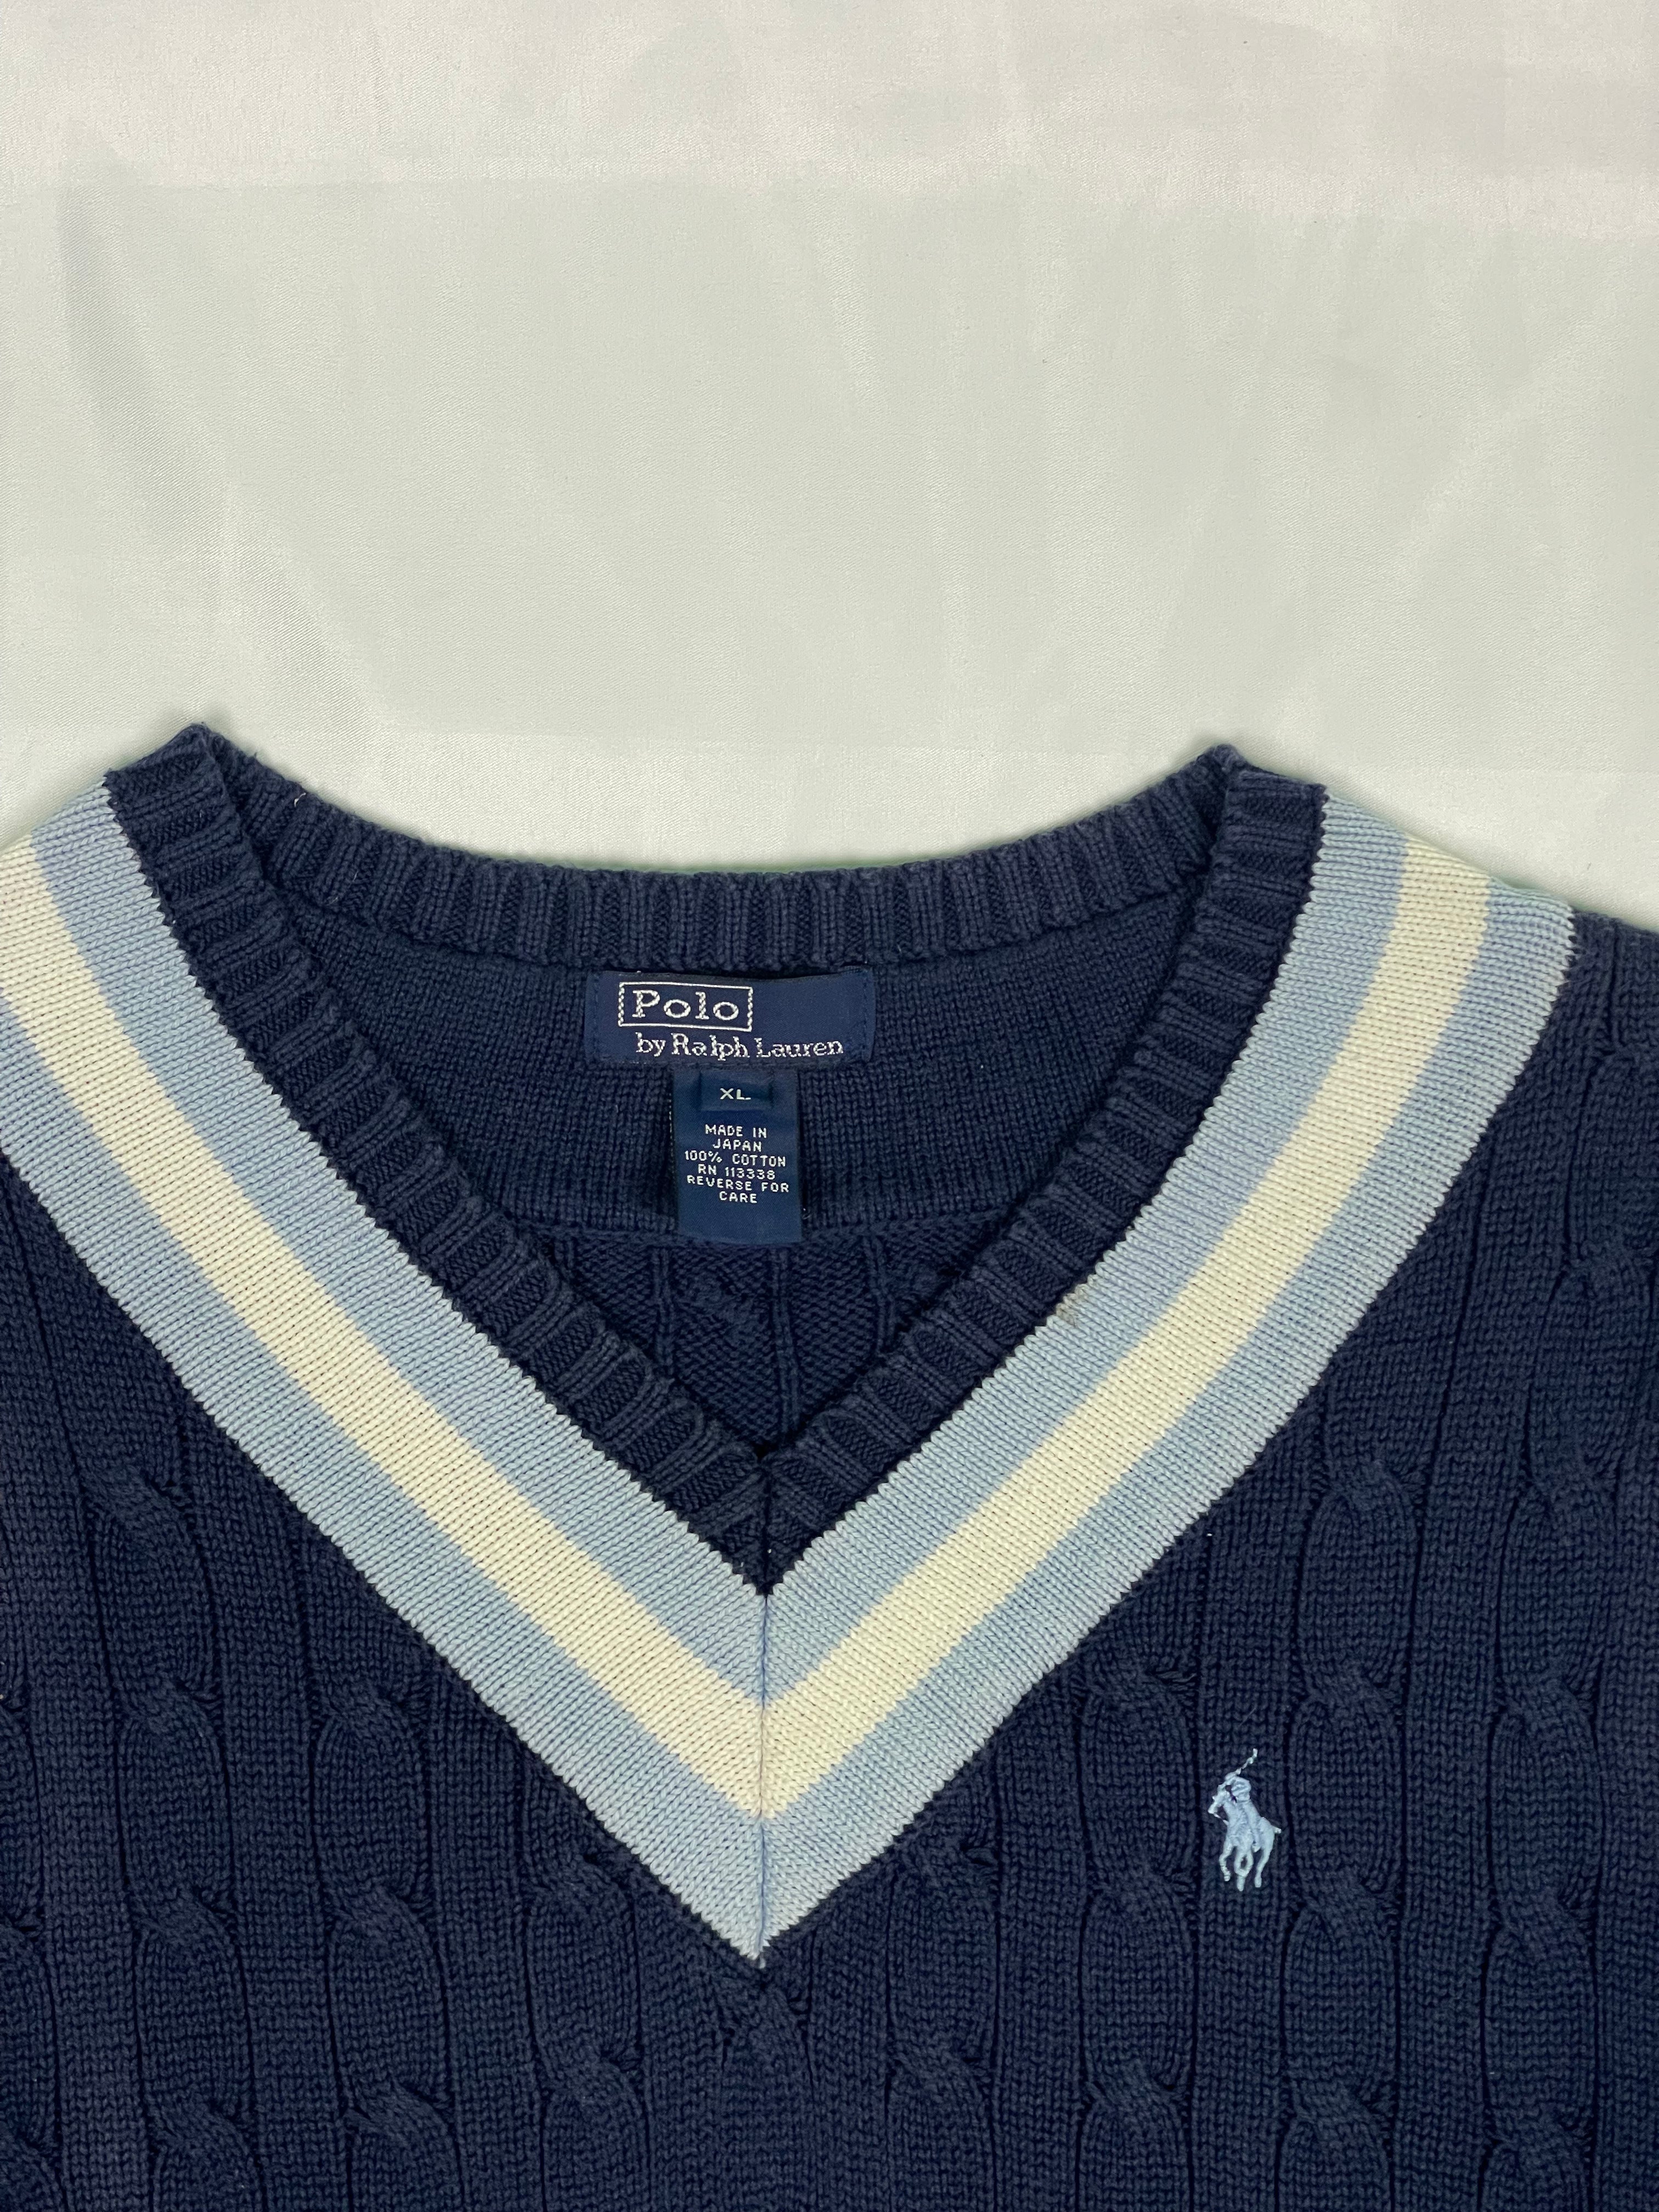 Polo by Ralph Lauren Vintage Sweater Vest